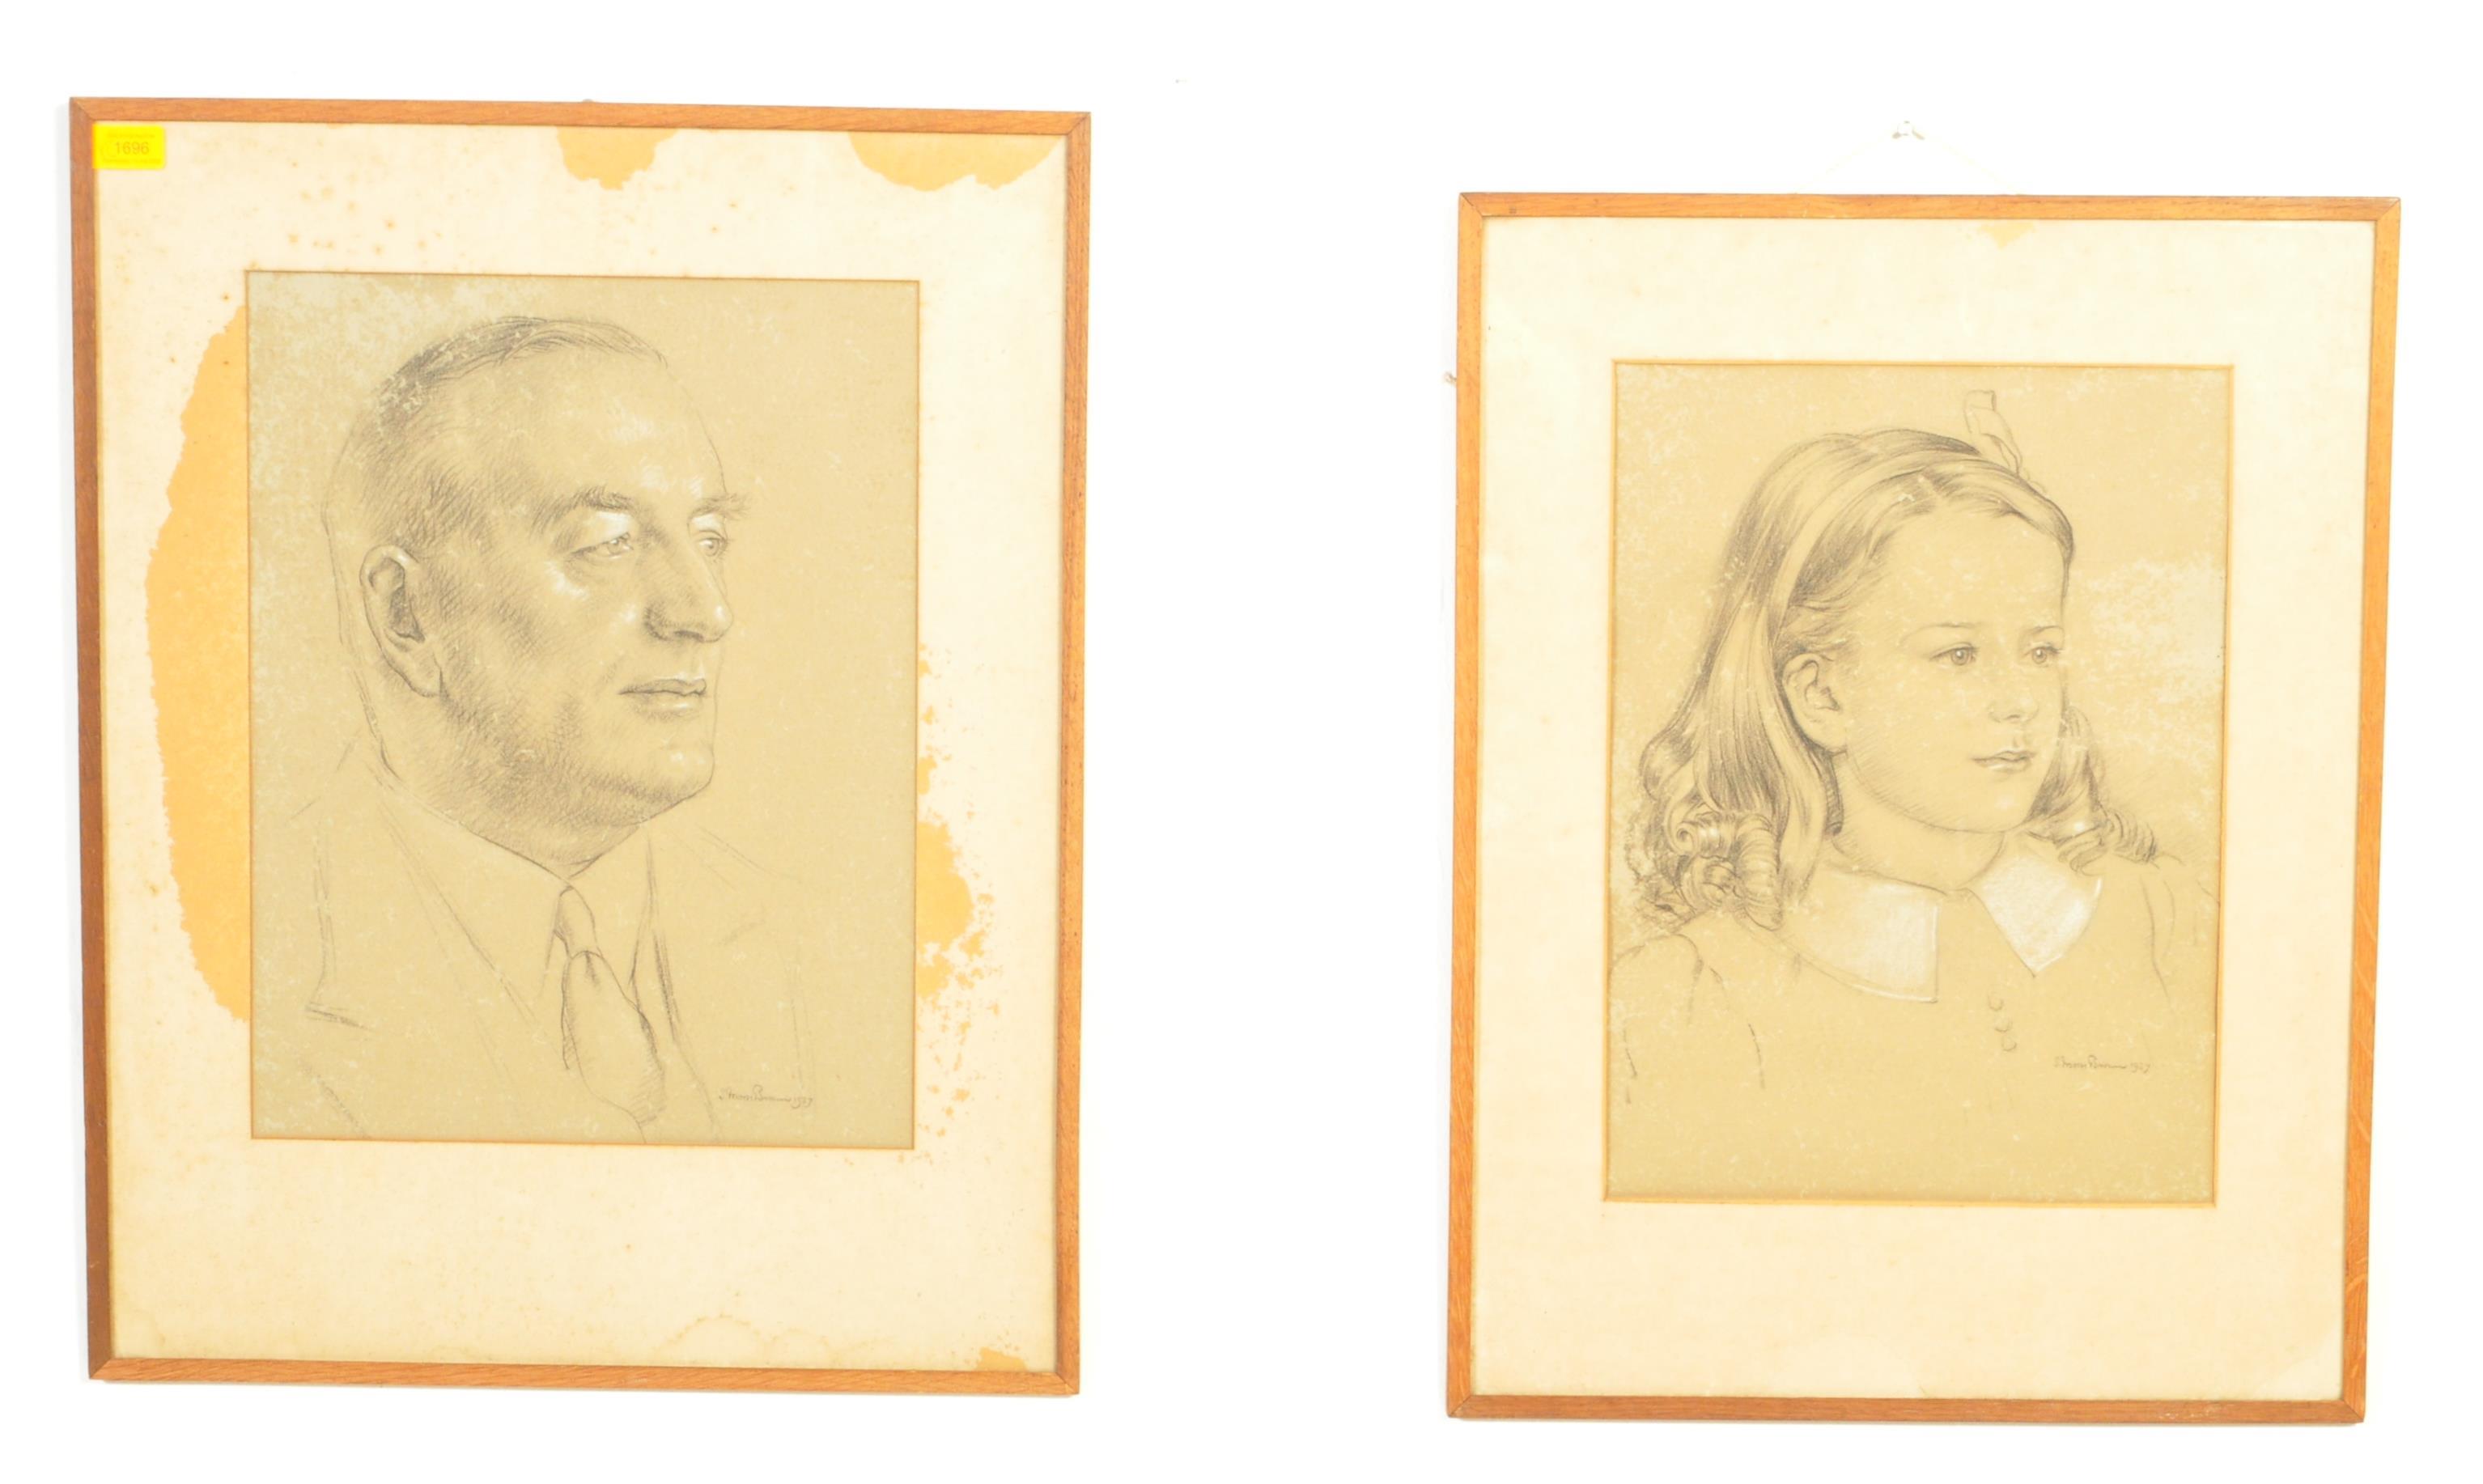 SAM MORSE BROWN (1903-2001) - TWO PENCIL & CHALK PORTRAIT STUDIES